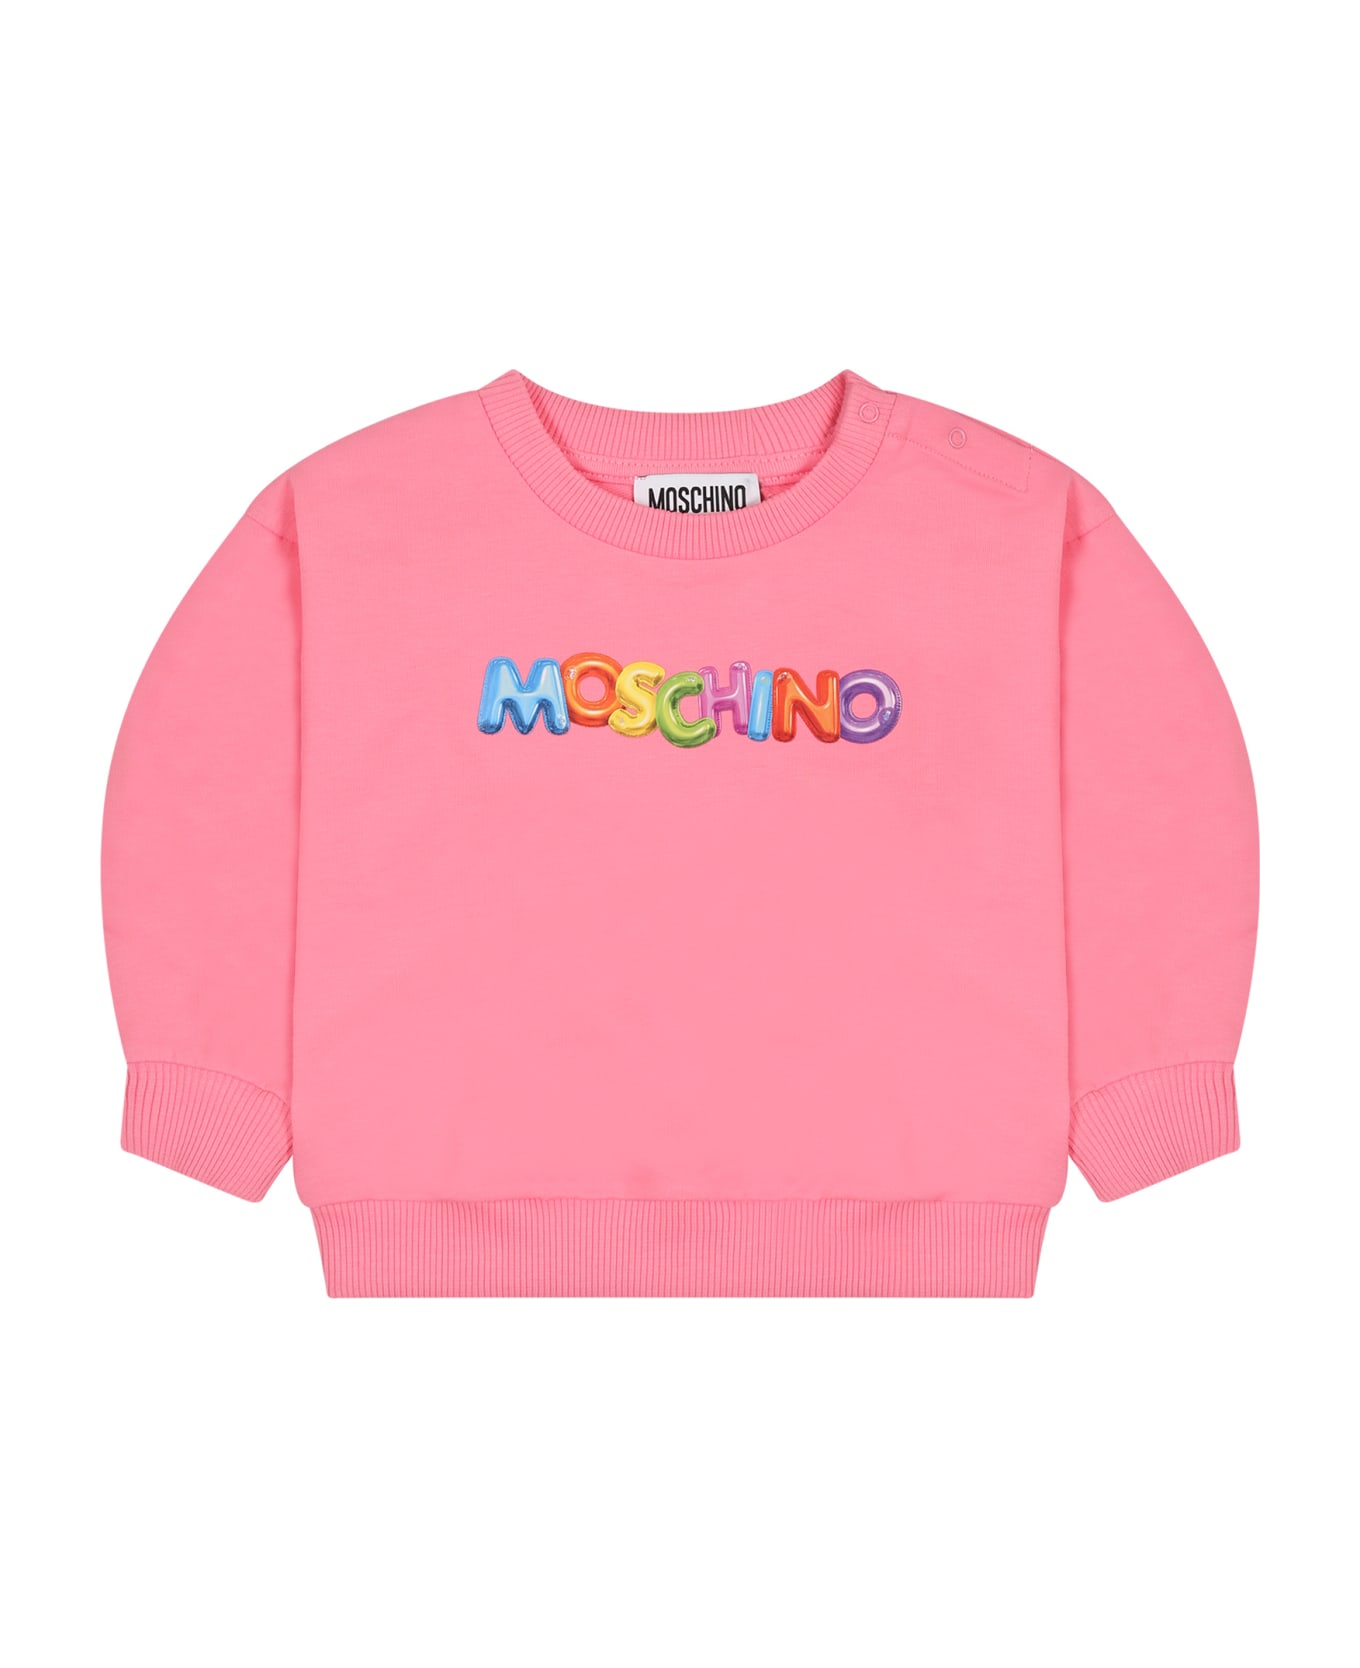 Moschino Pink Sweatshirt For Baby Girl With Logo - Pink